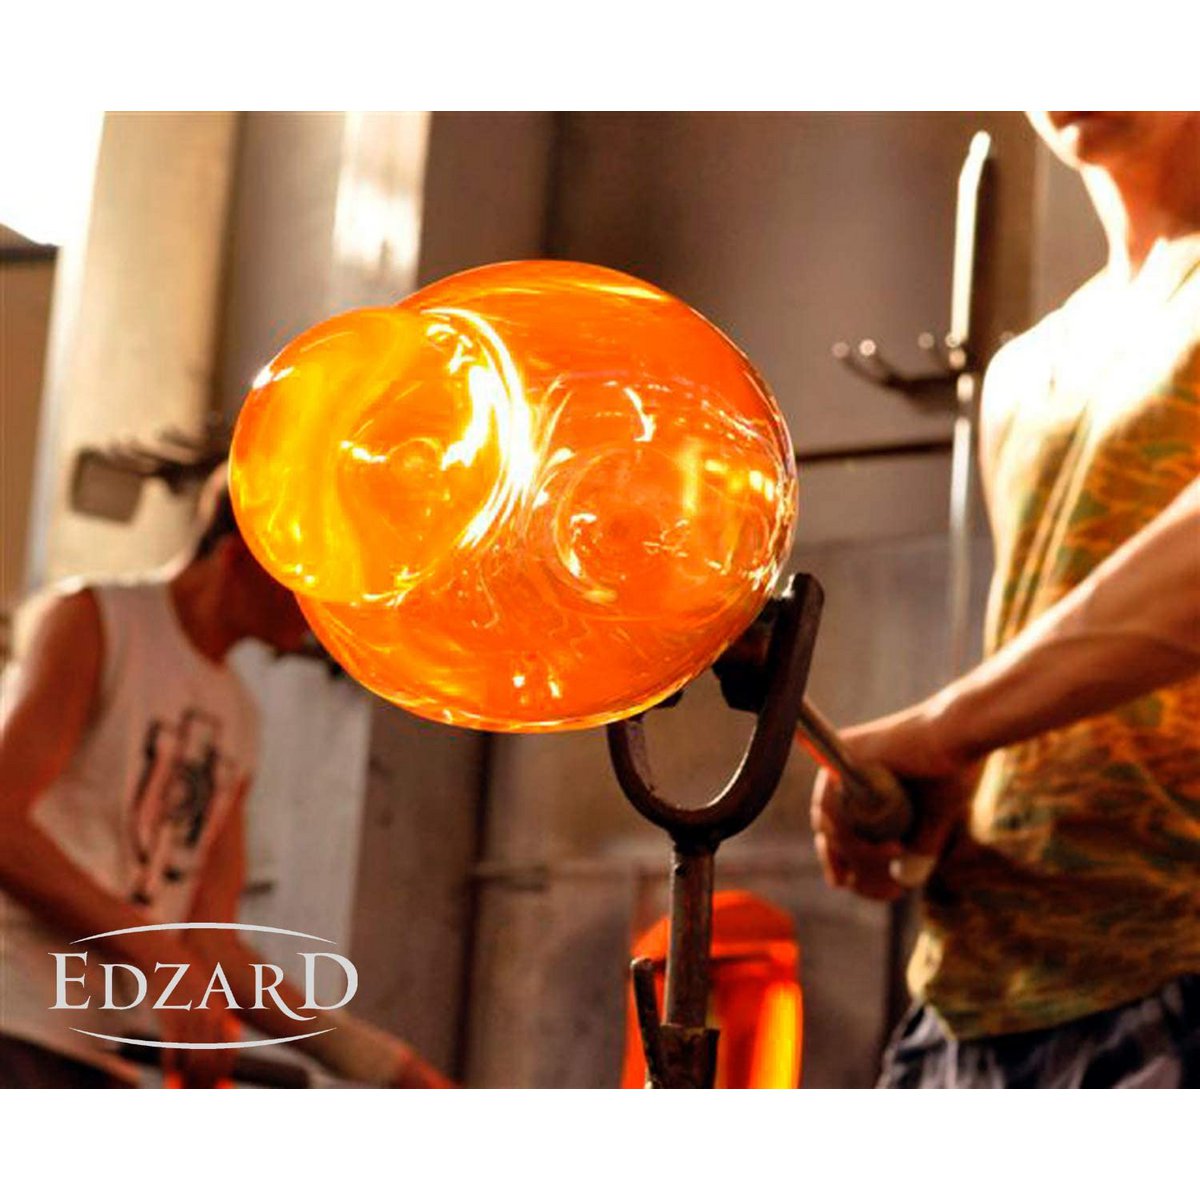 EDZARD Krug Johnny, mundgeblasenes Kristallglas mit Platinrand, Höhe 30 cm, ø 14 cm, Füllmenge 1,8 Liter